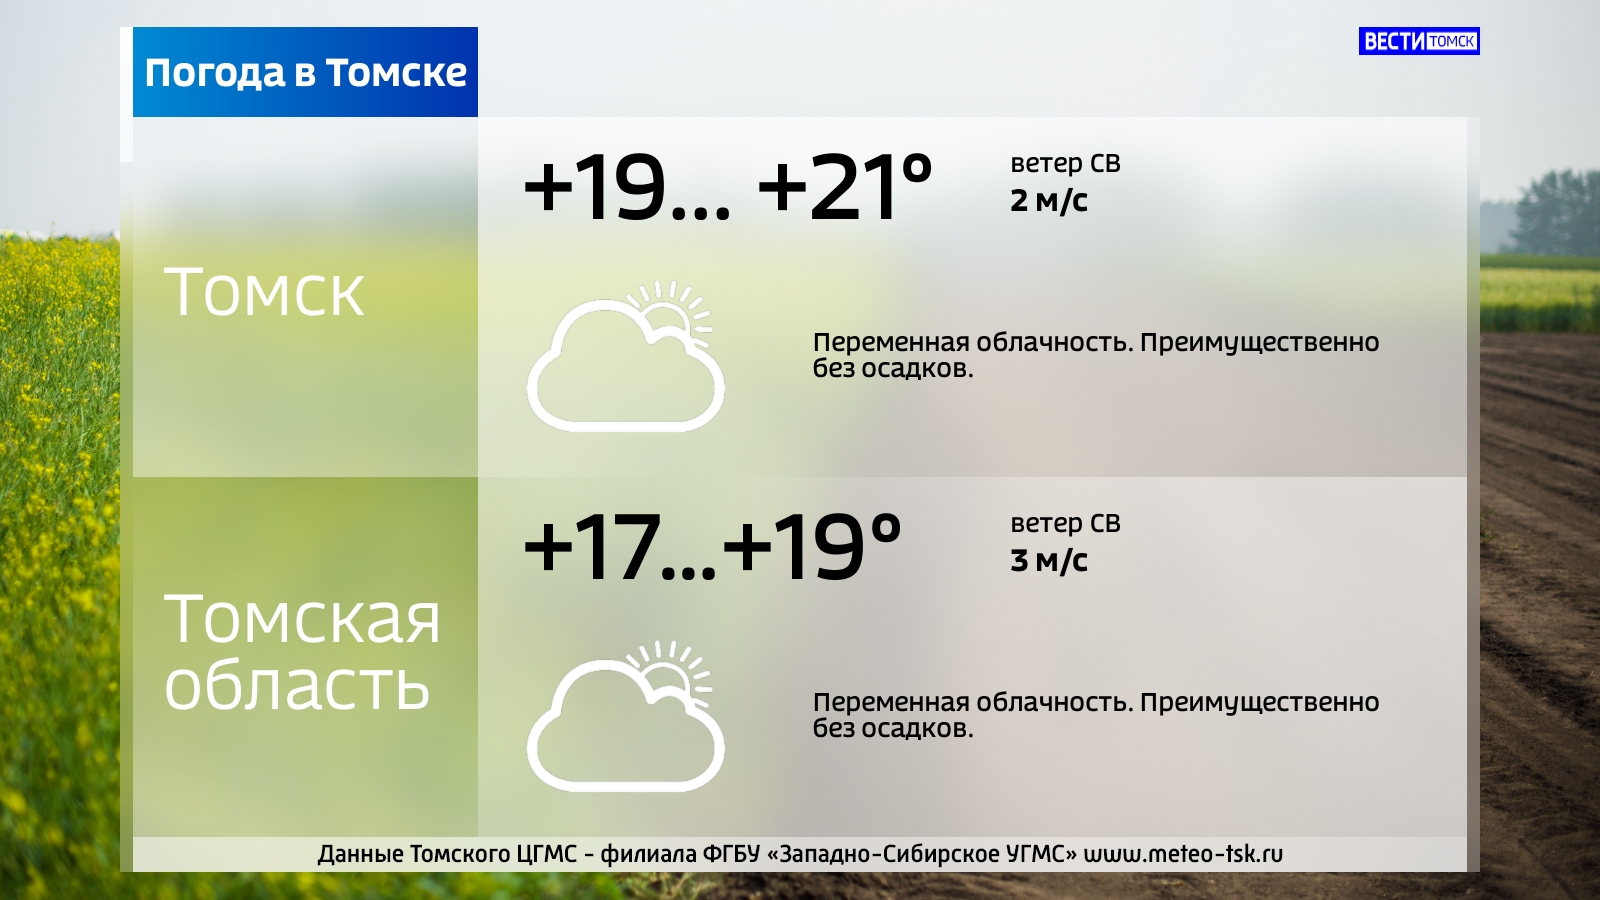 Погода в томском. Томск климат. Облачность в Томске. Погода в Томске на завтра. Прогноз погоды на завтра в Томске.